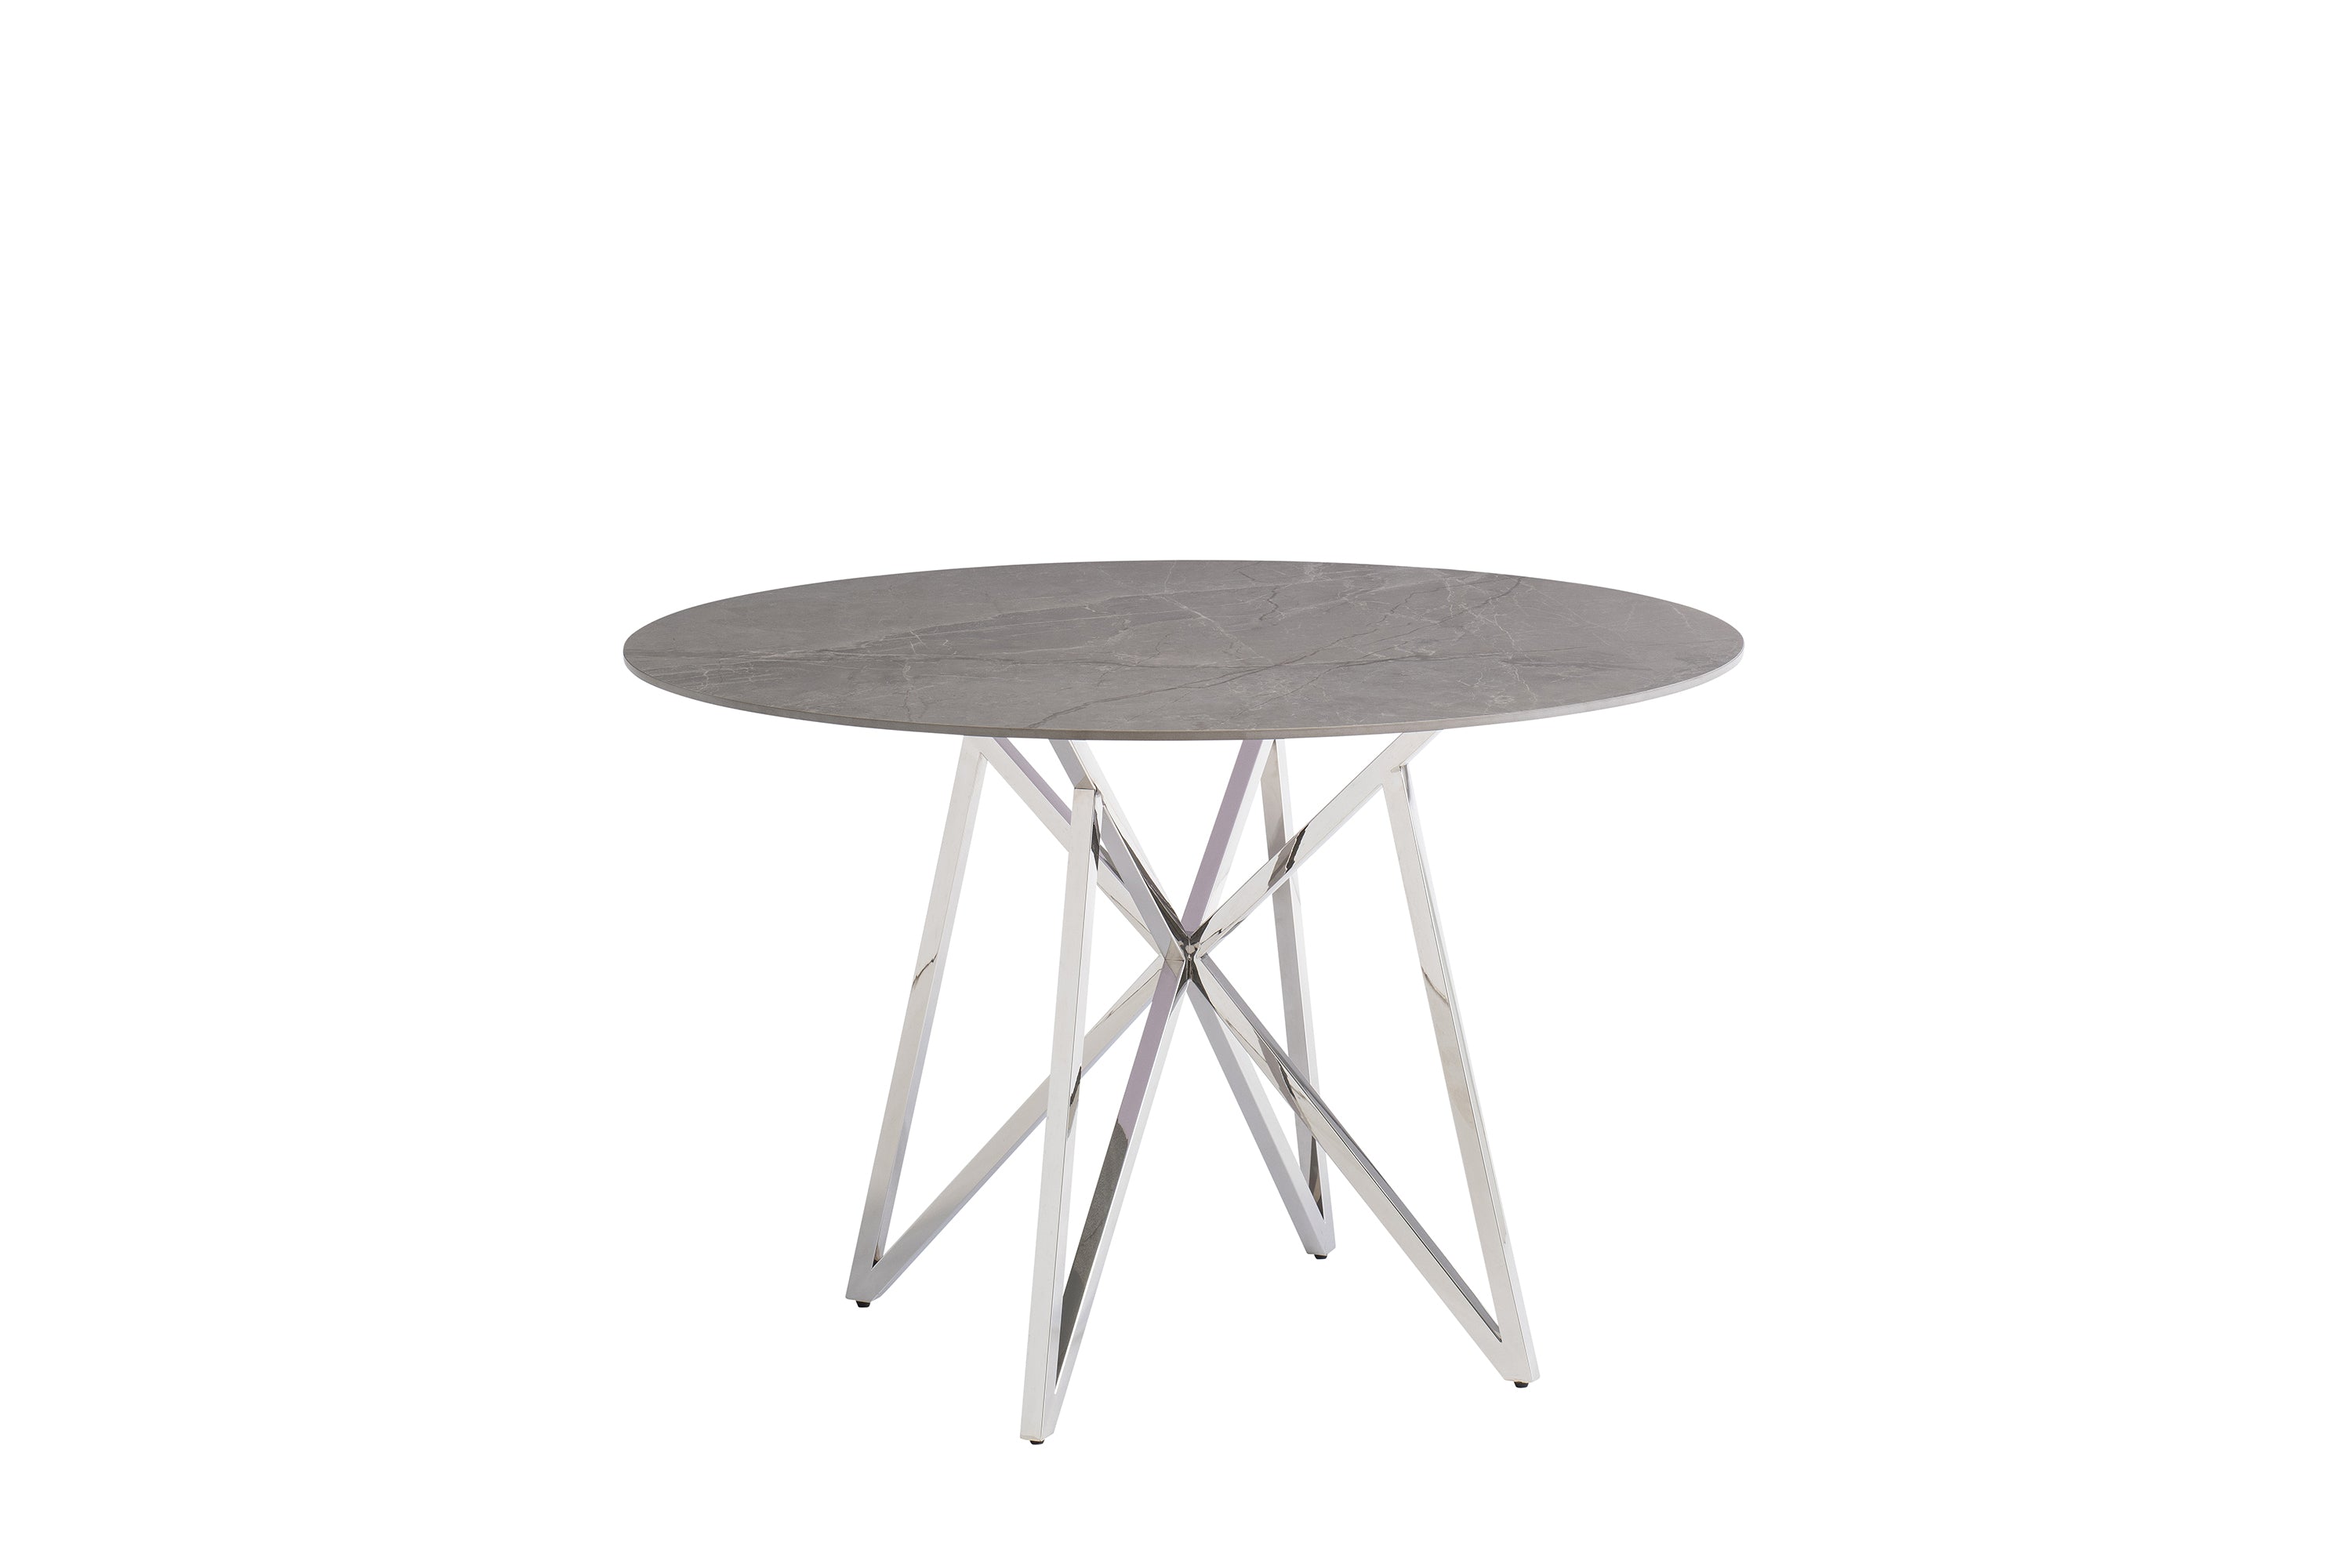 Jenis Sintered Stone Tops / Chrome Leg Dining Table